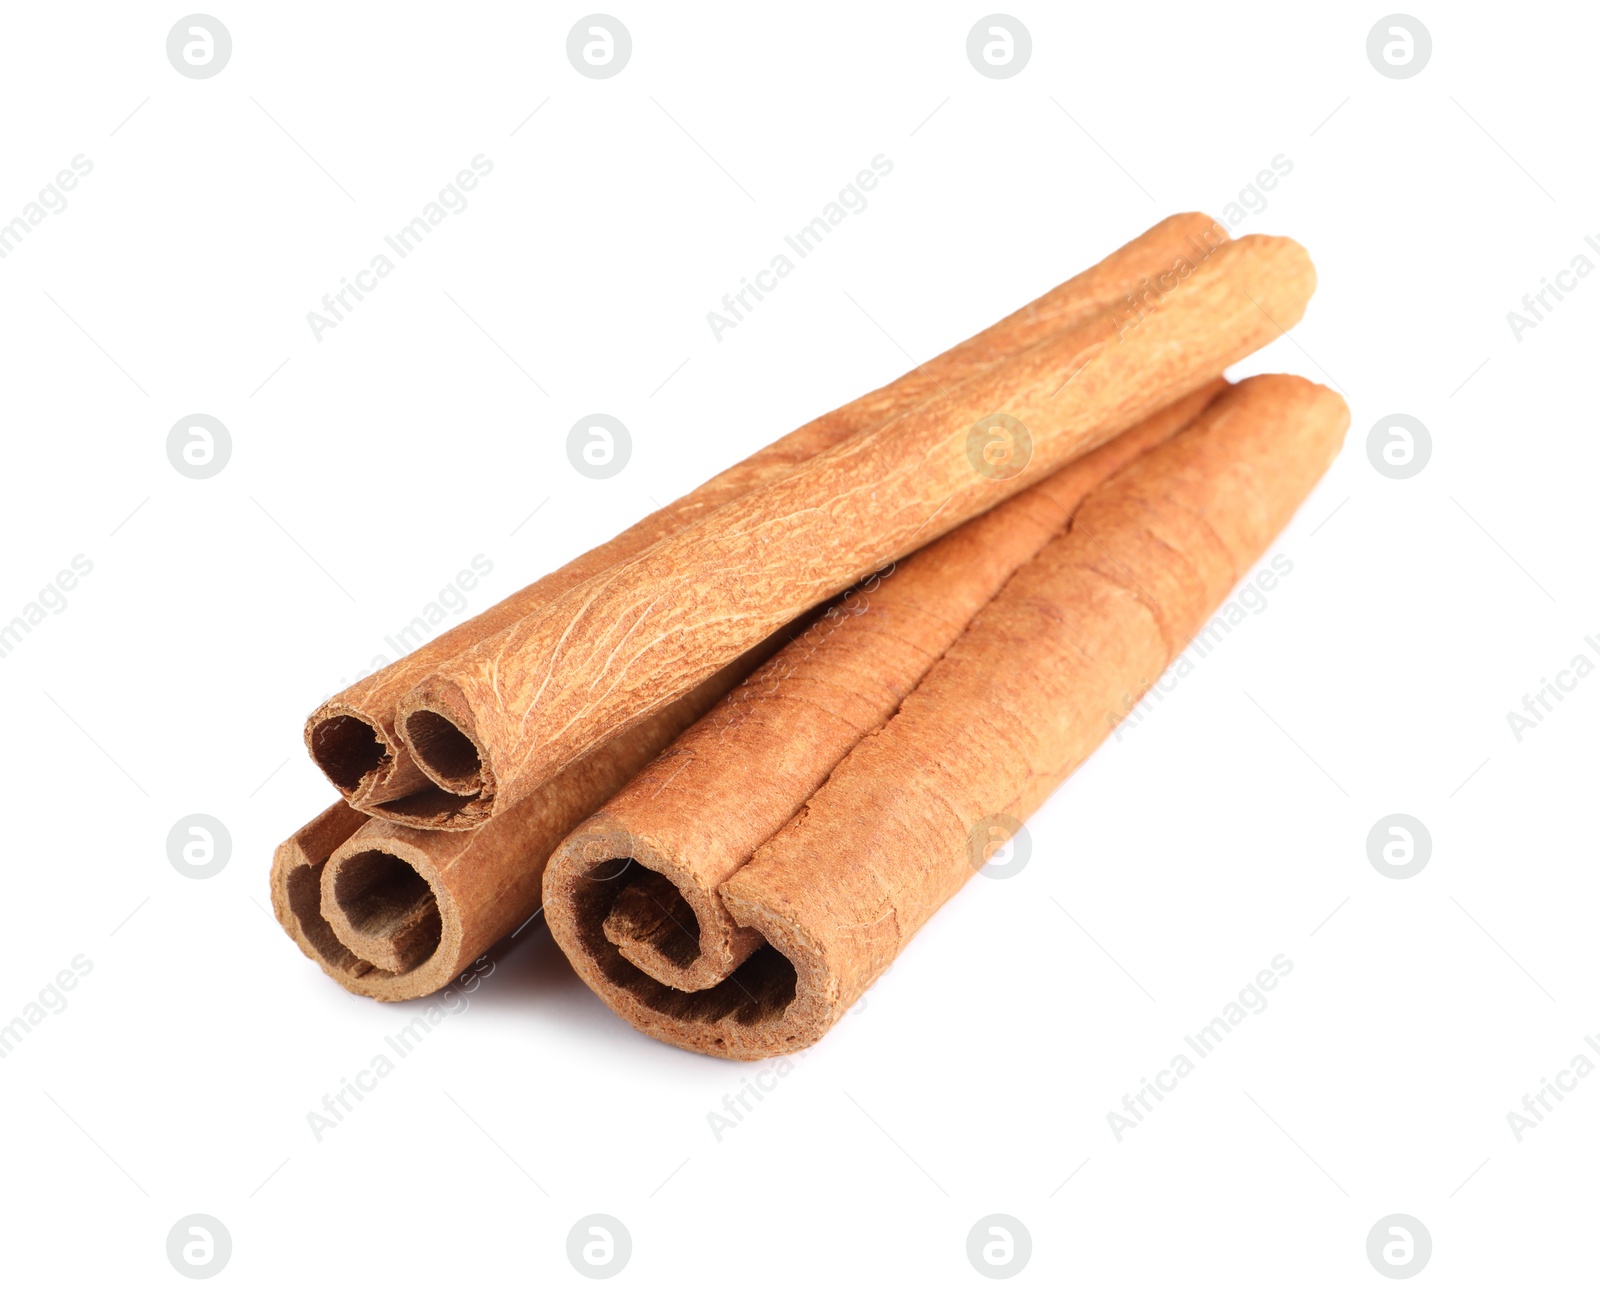 Photo of Three aromatic cinnamon sticks isolated on white